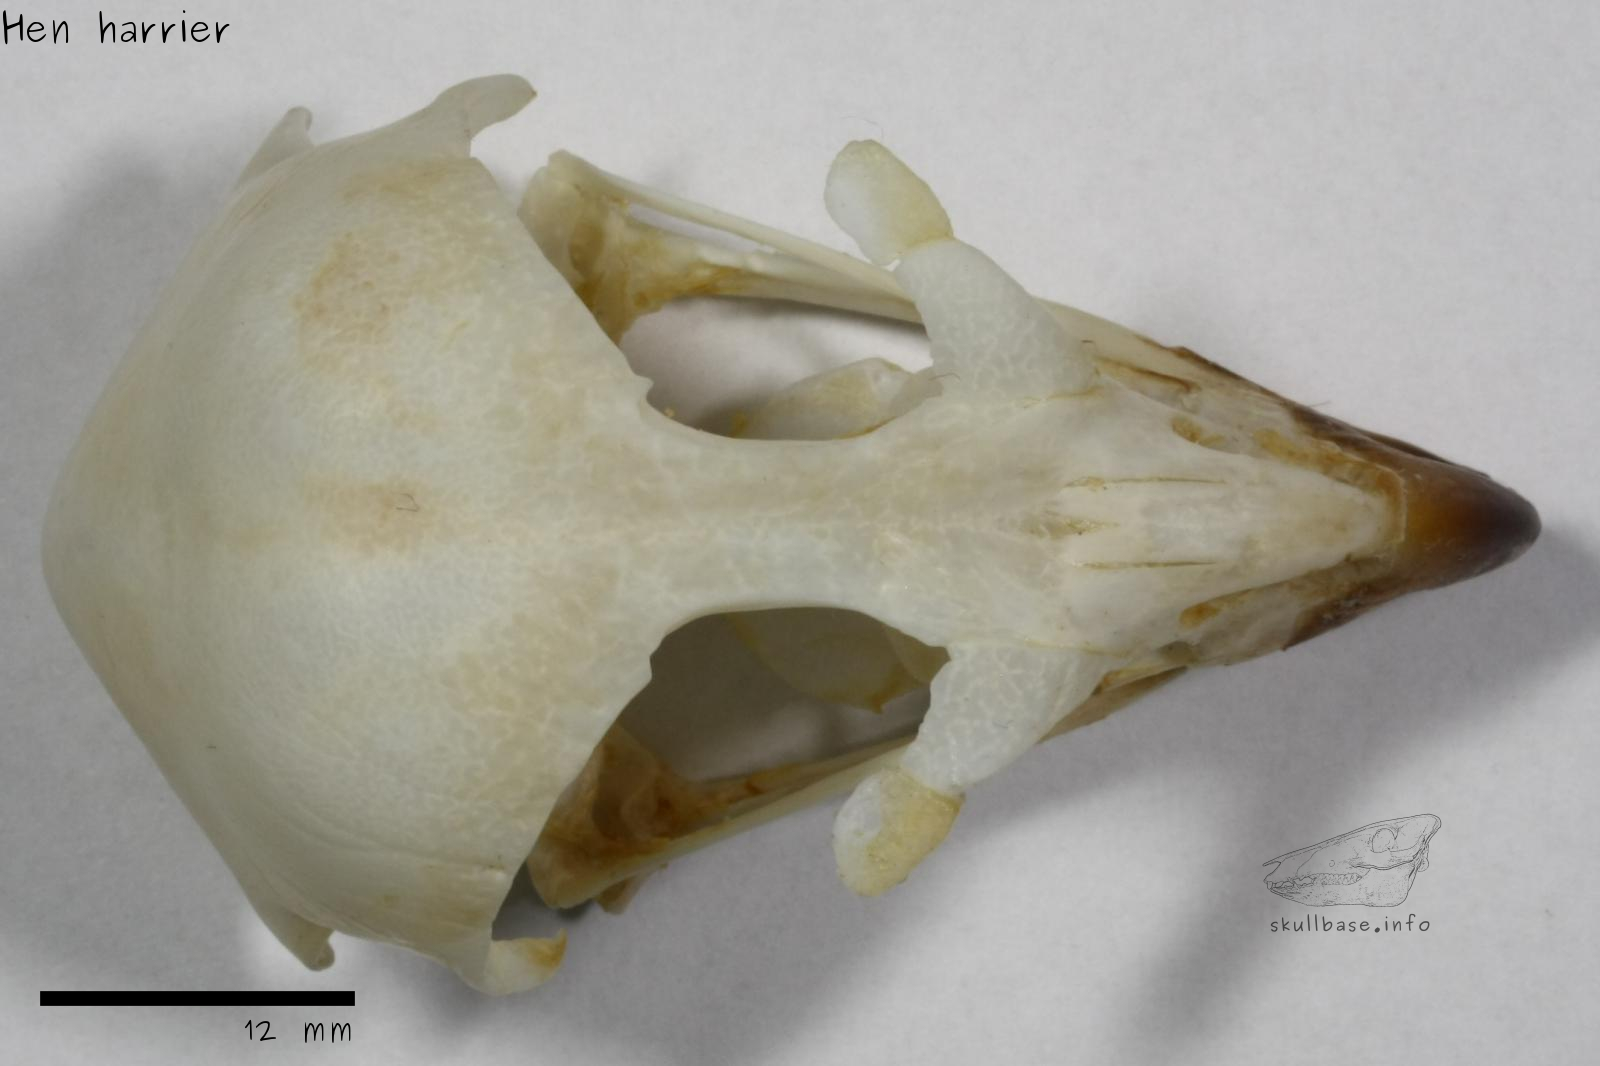 Hen harrier (Circus cyaneus) skull dorsal view